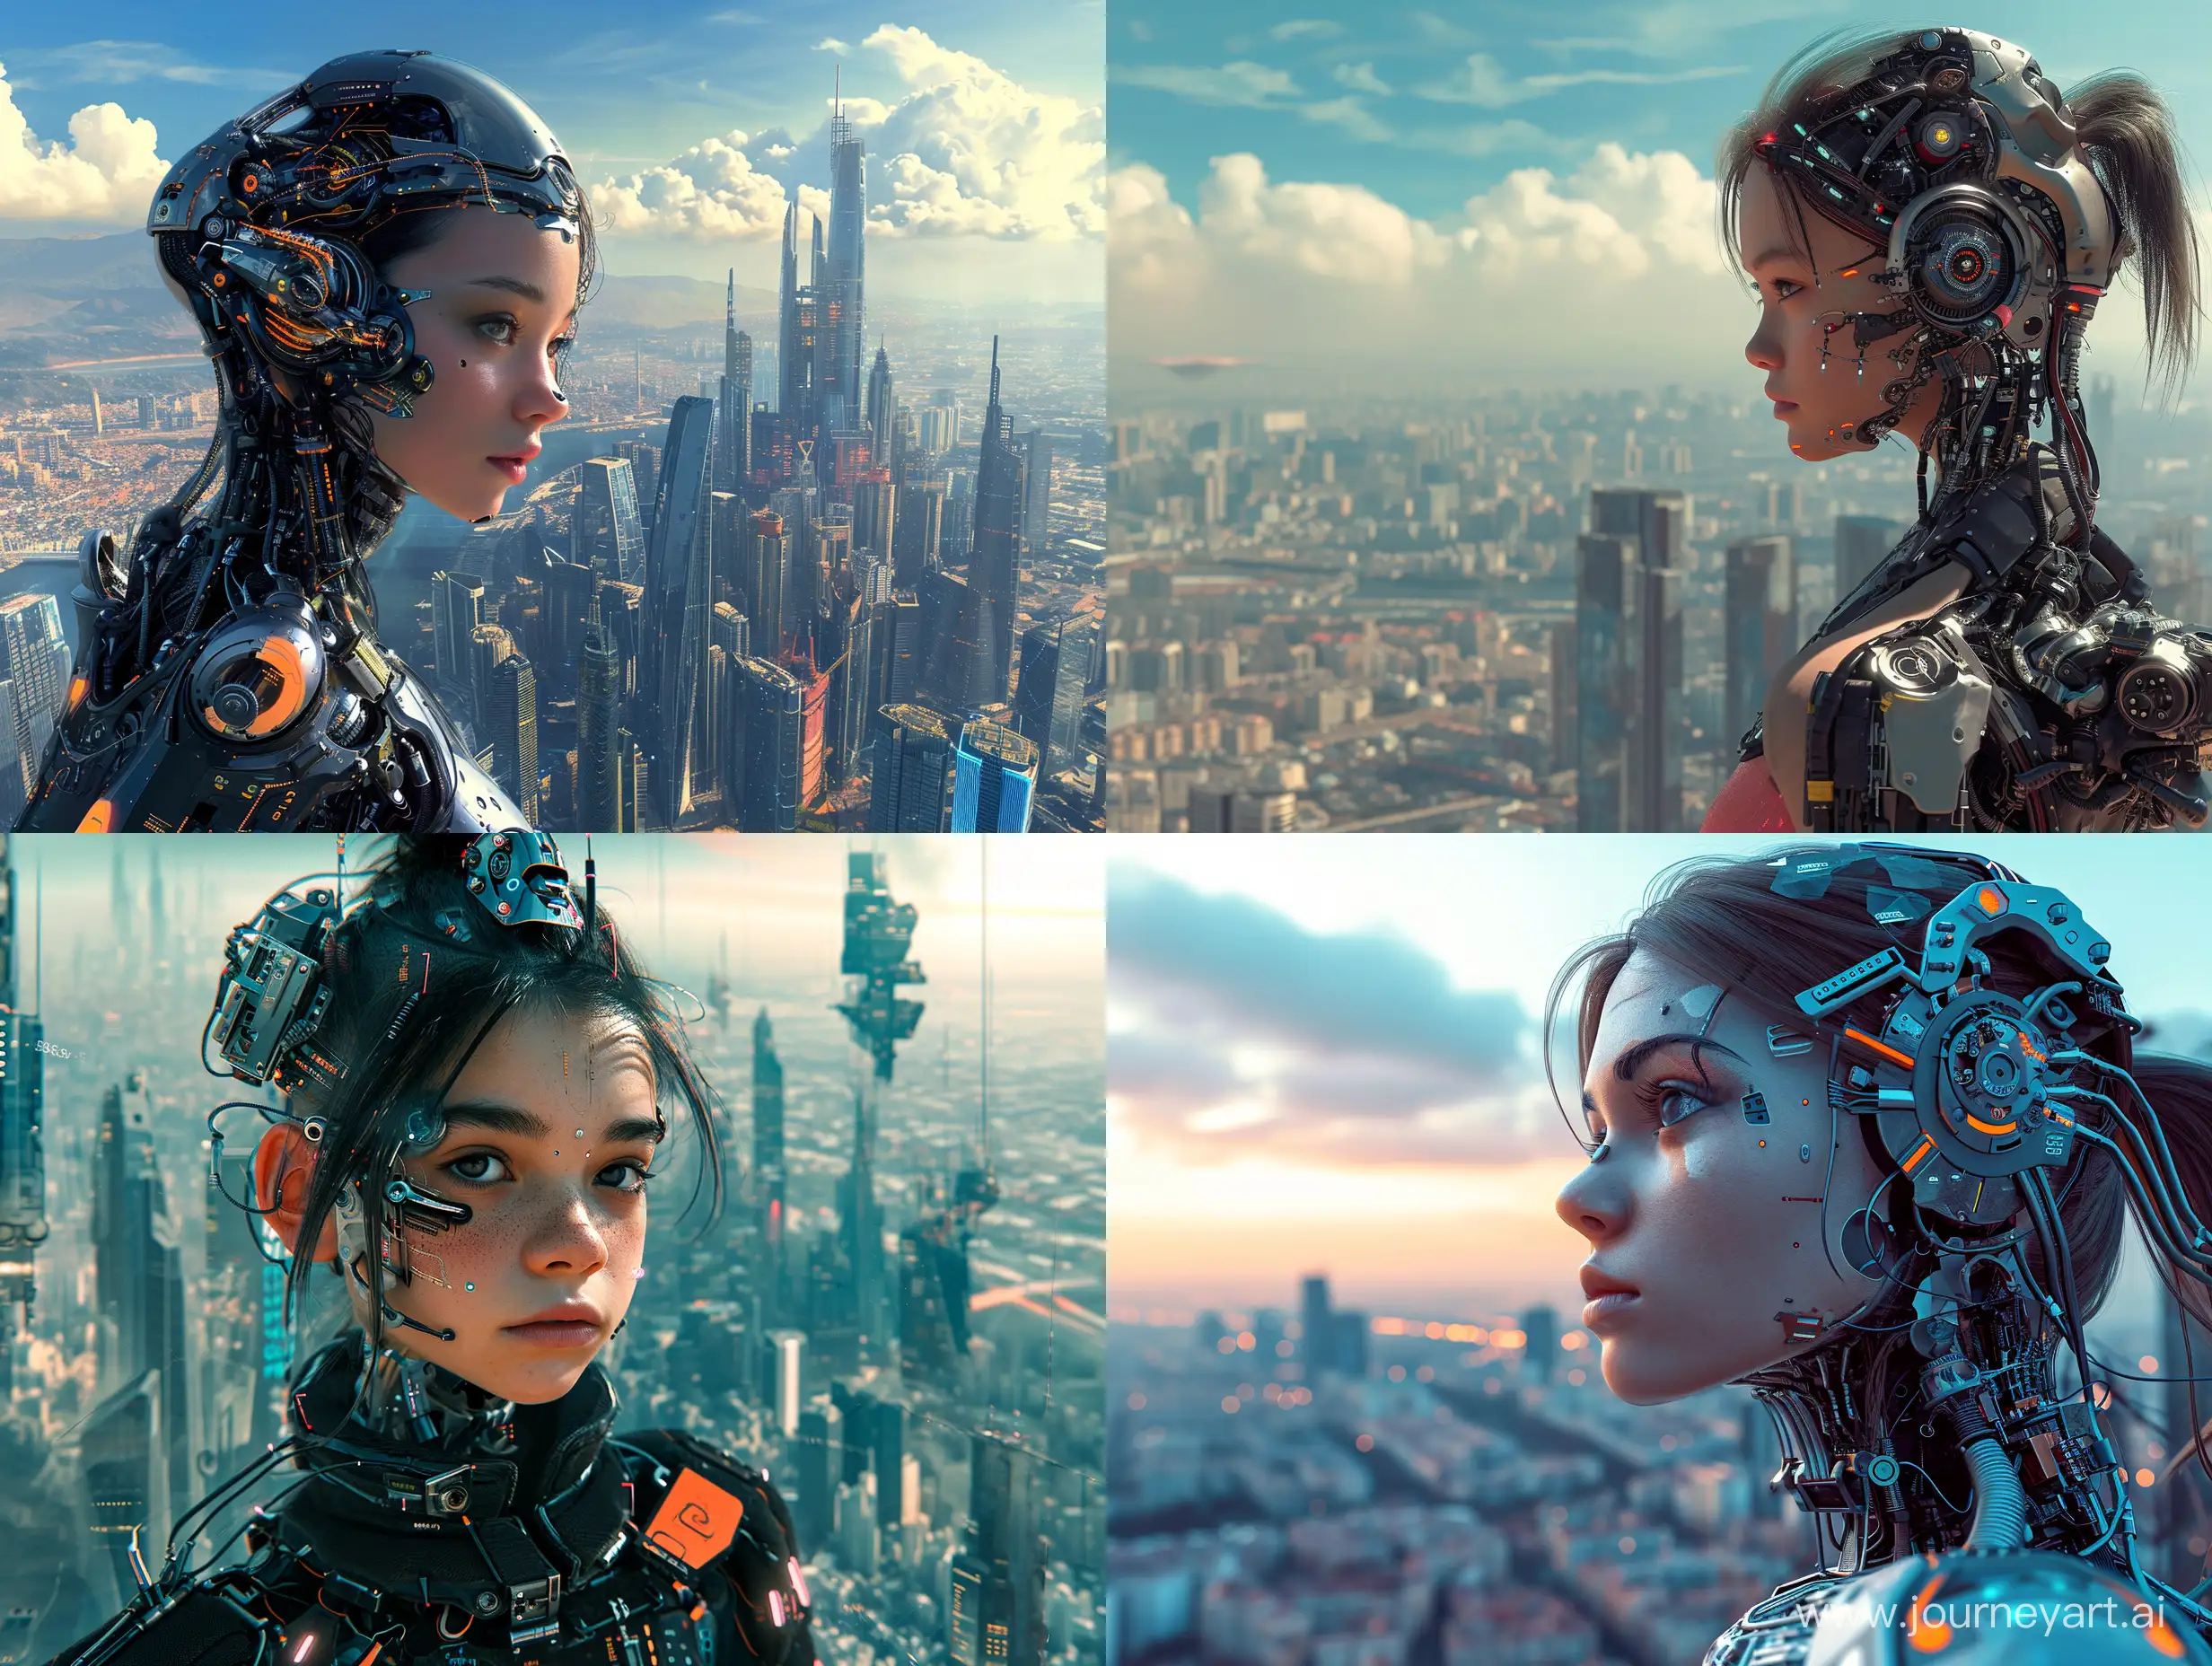 Futuristic-Cityscape-17YearOld-Female-Cyborg-and-Evolving-Technology